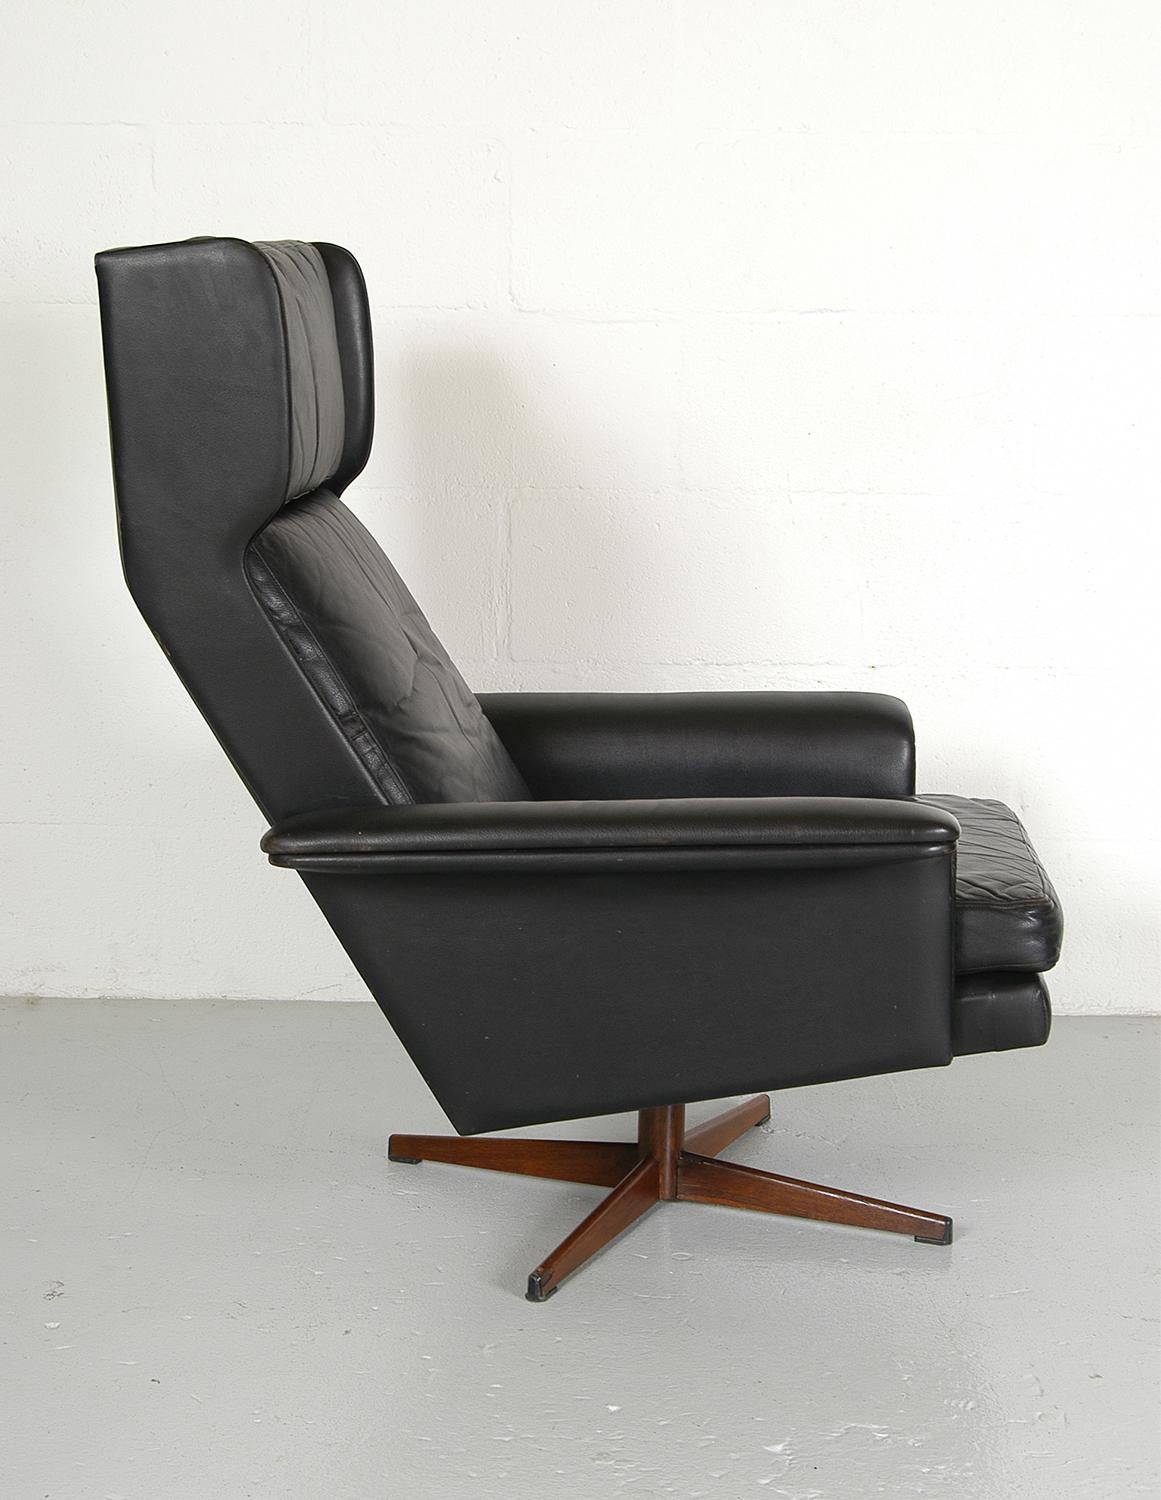 Steel Pair Midcentury Danish Leather Lounge Chairs by Komfort designed HW Klein 1960s